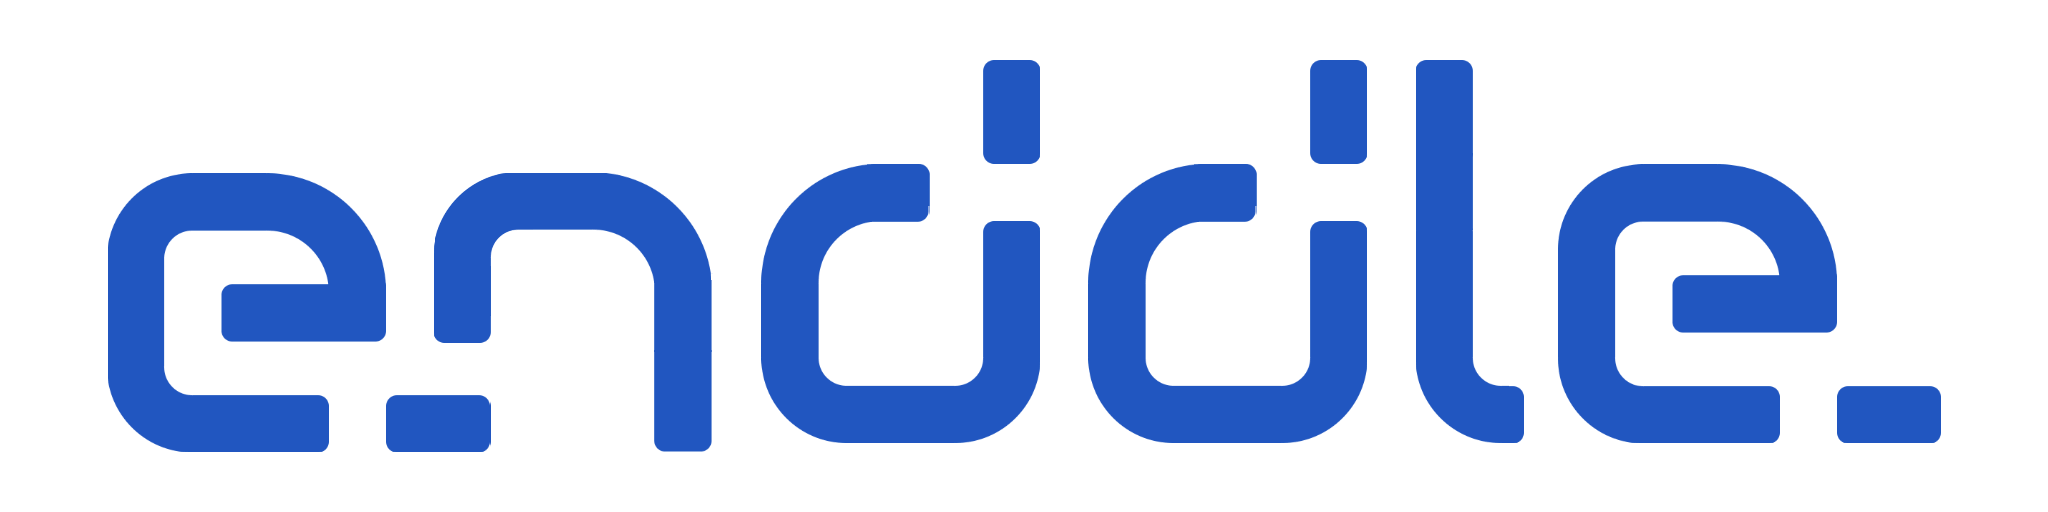 enddle logo